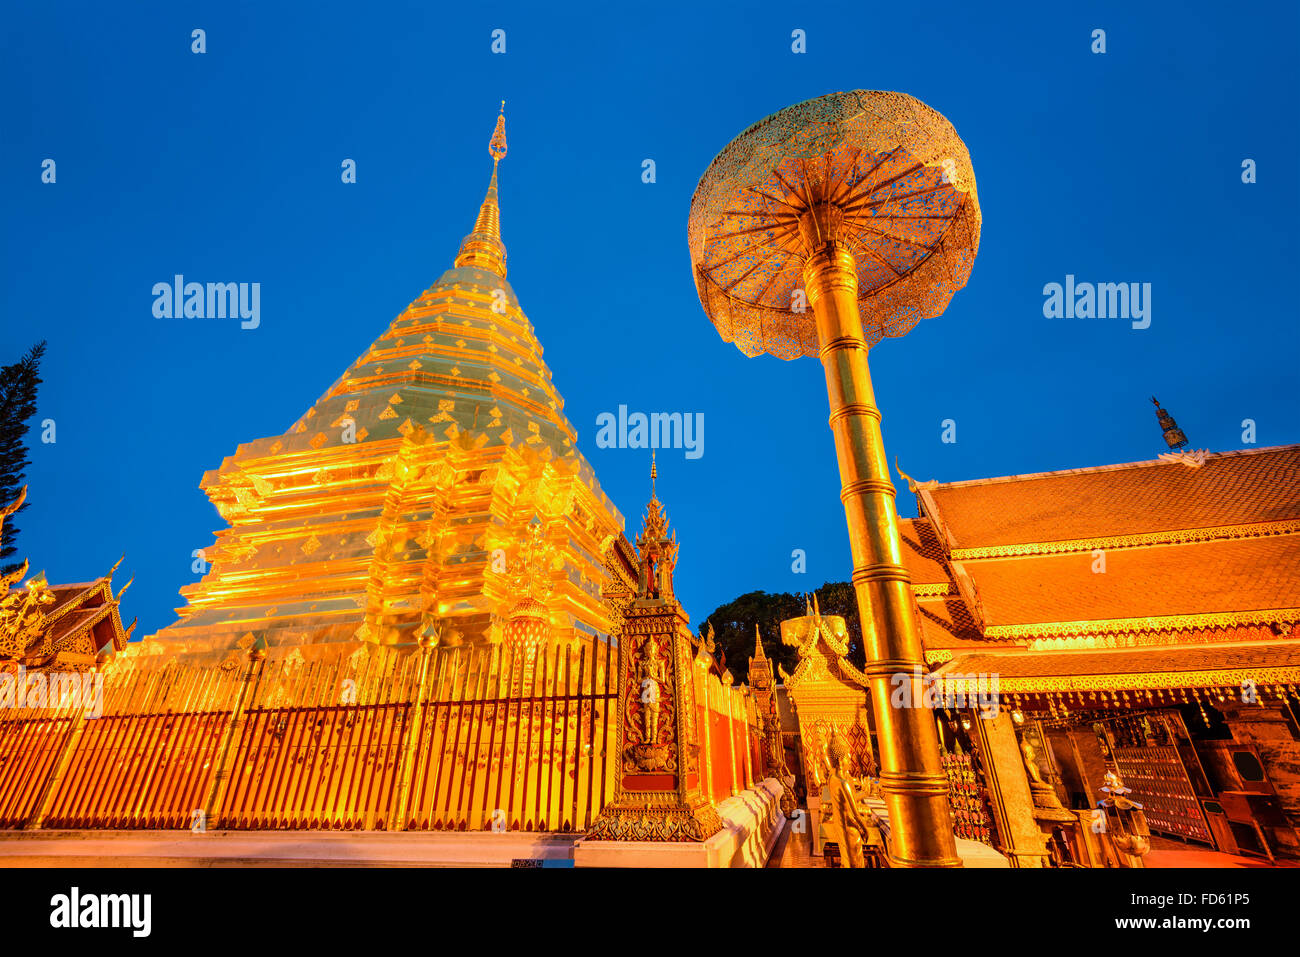 Wat Phra That Doi Suthep Temple of Chiang Mai, Thailand. Stock Photo